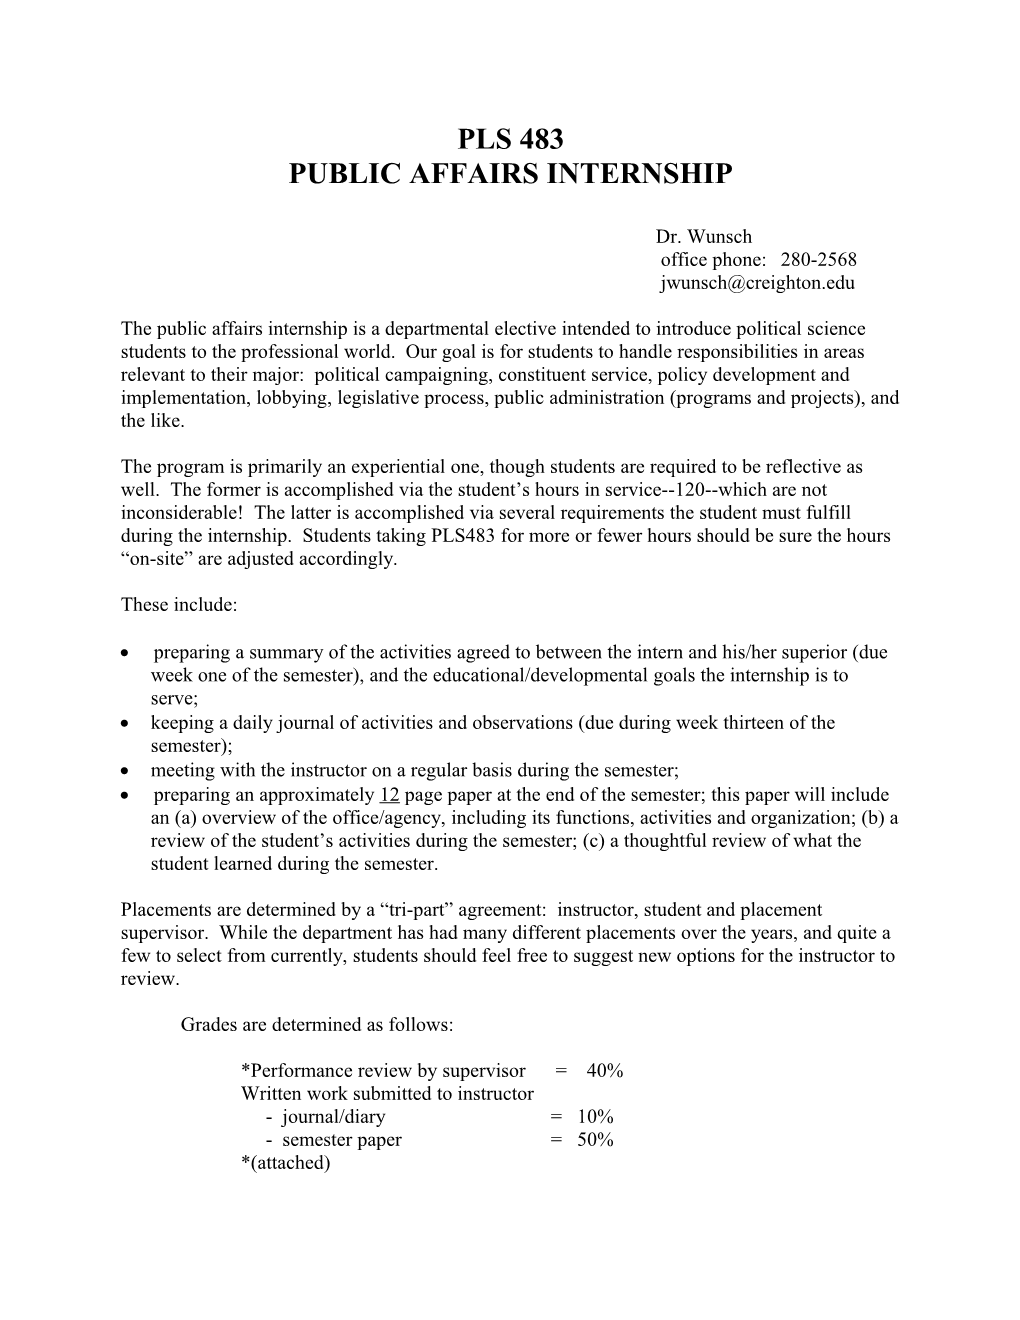 Public Affairs Internship